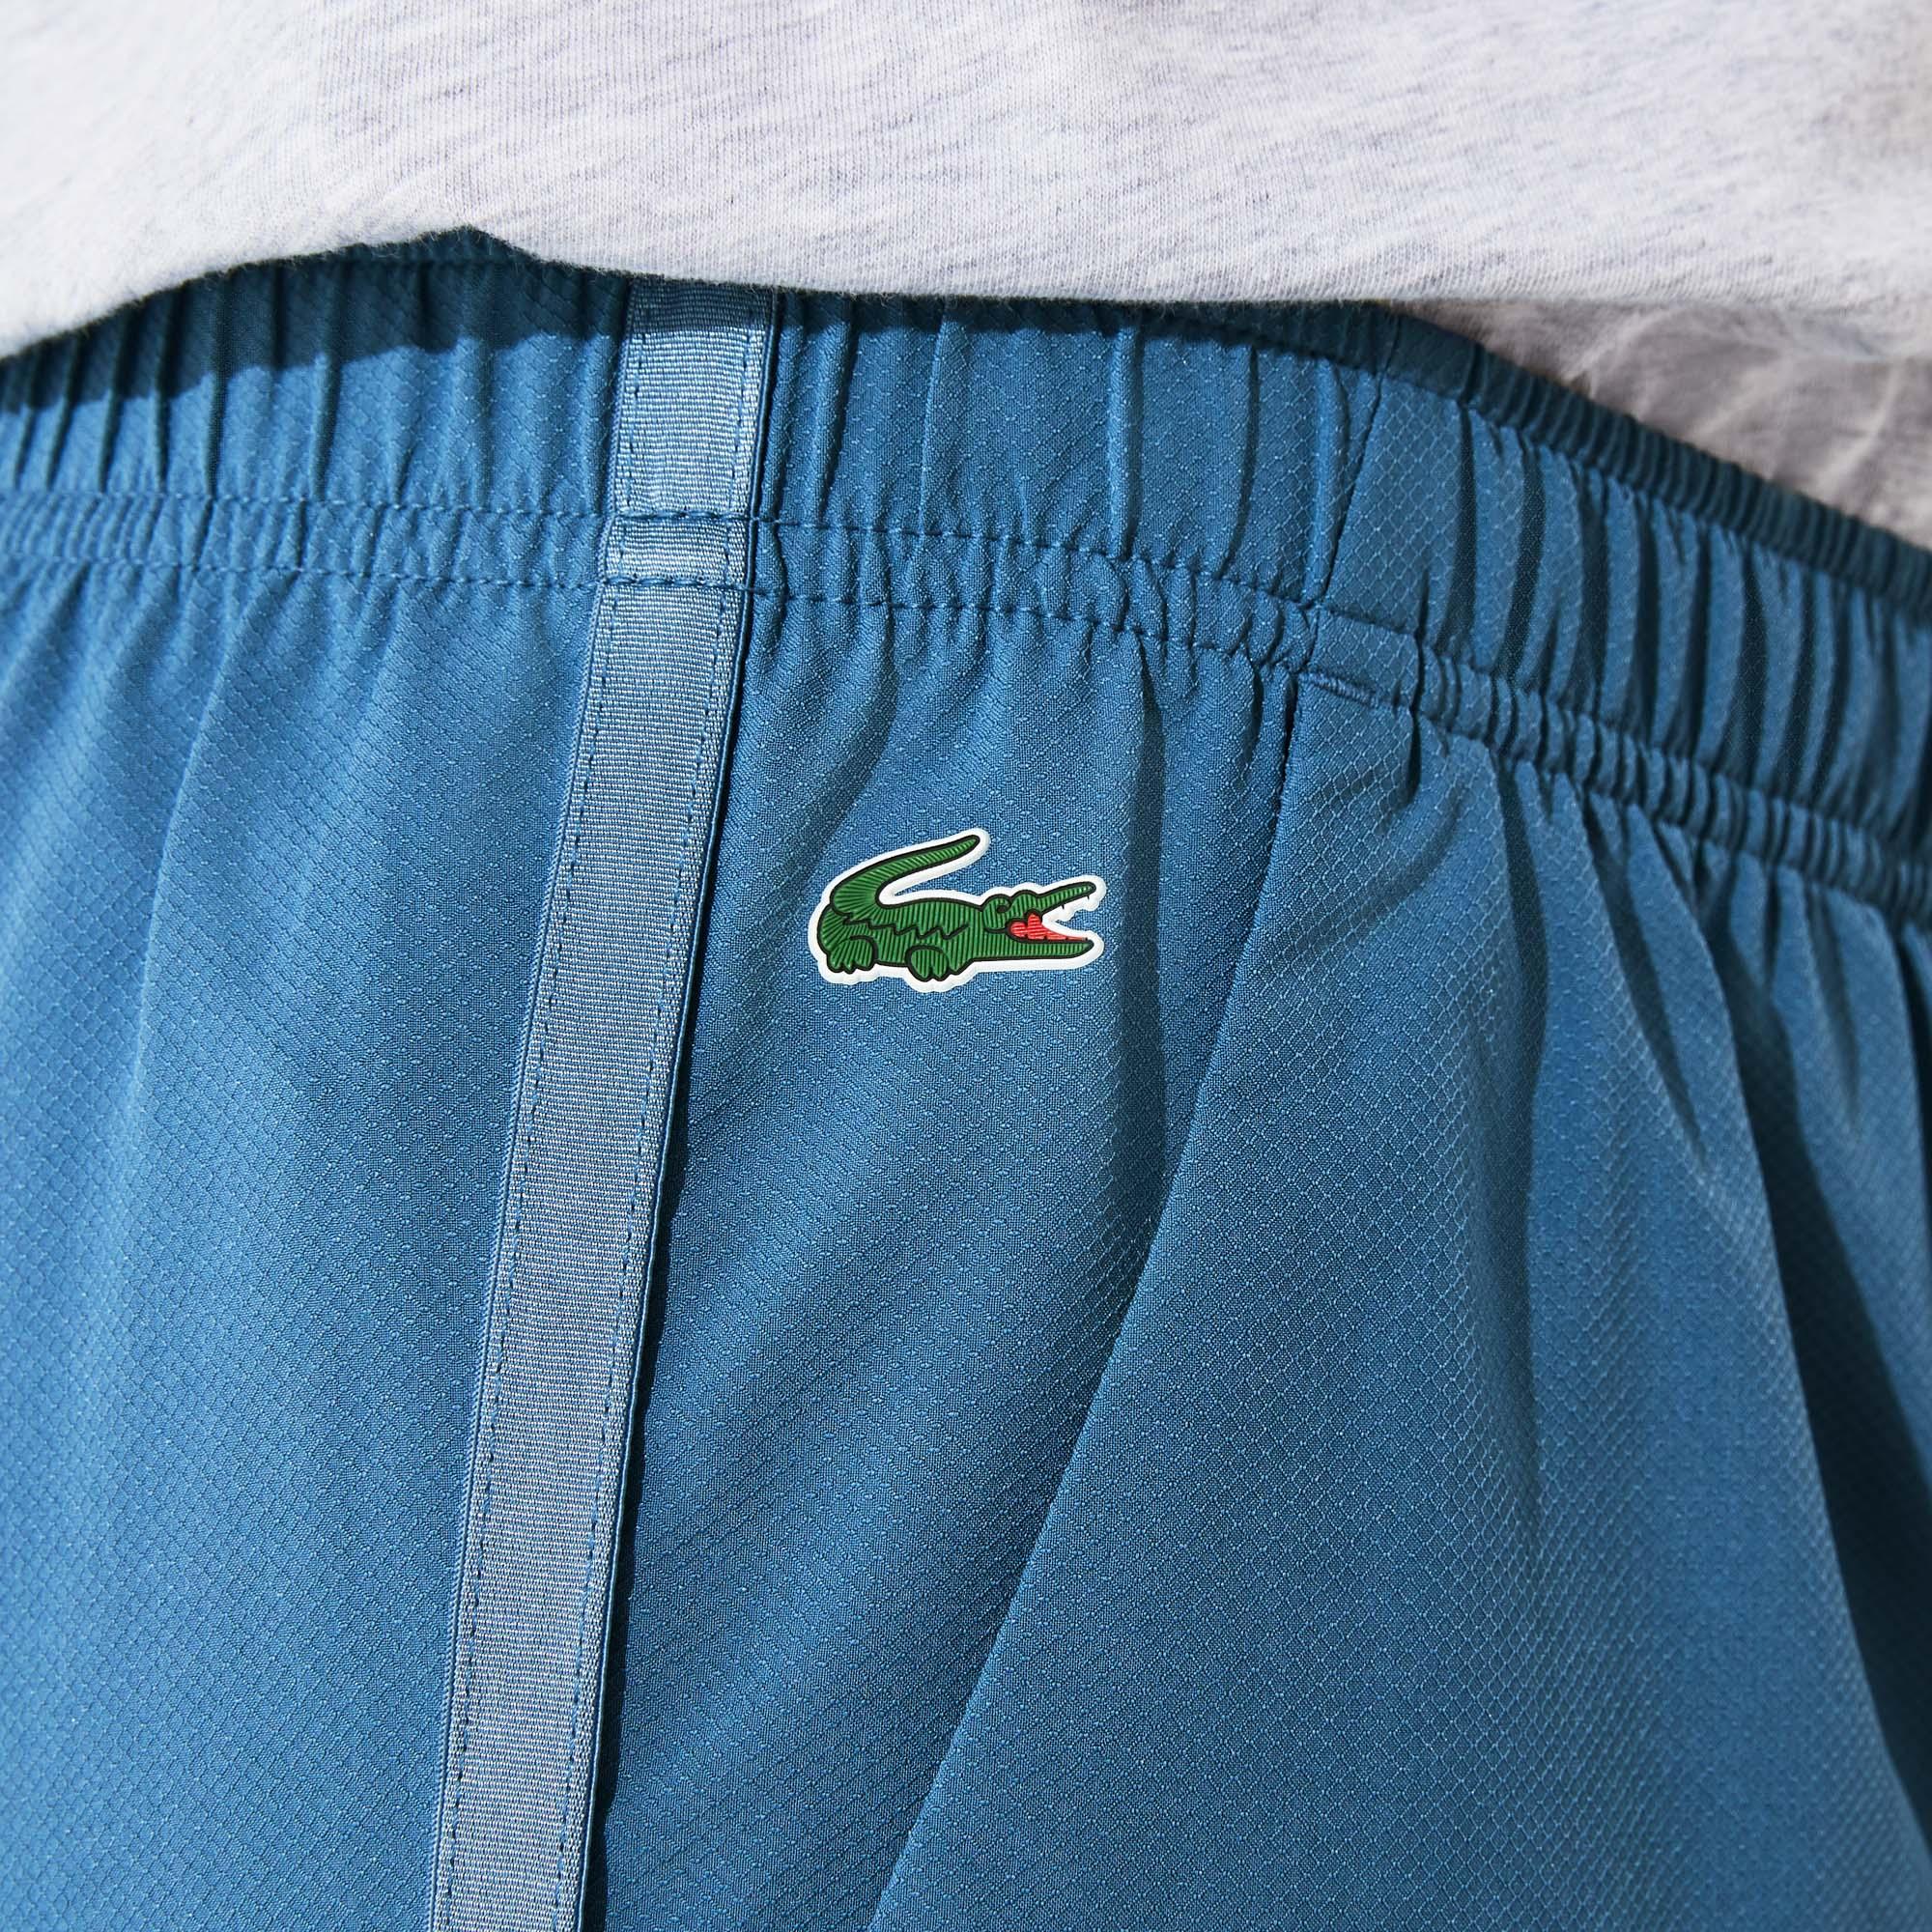 Lacoste Women's Sport Technical Water-Resistant Tennis Sweatpants